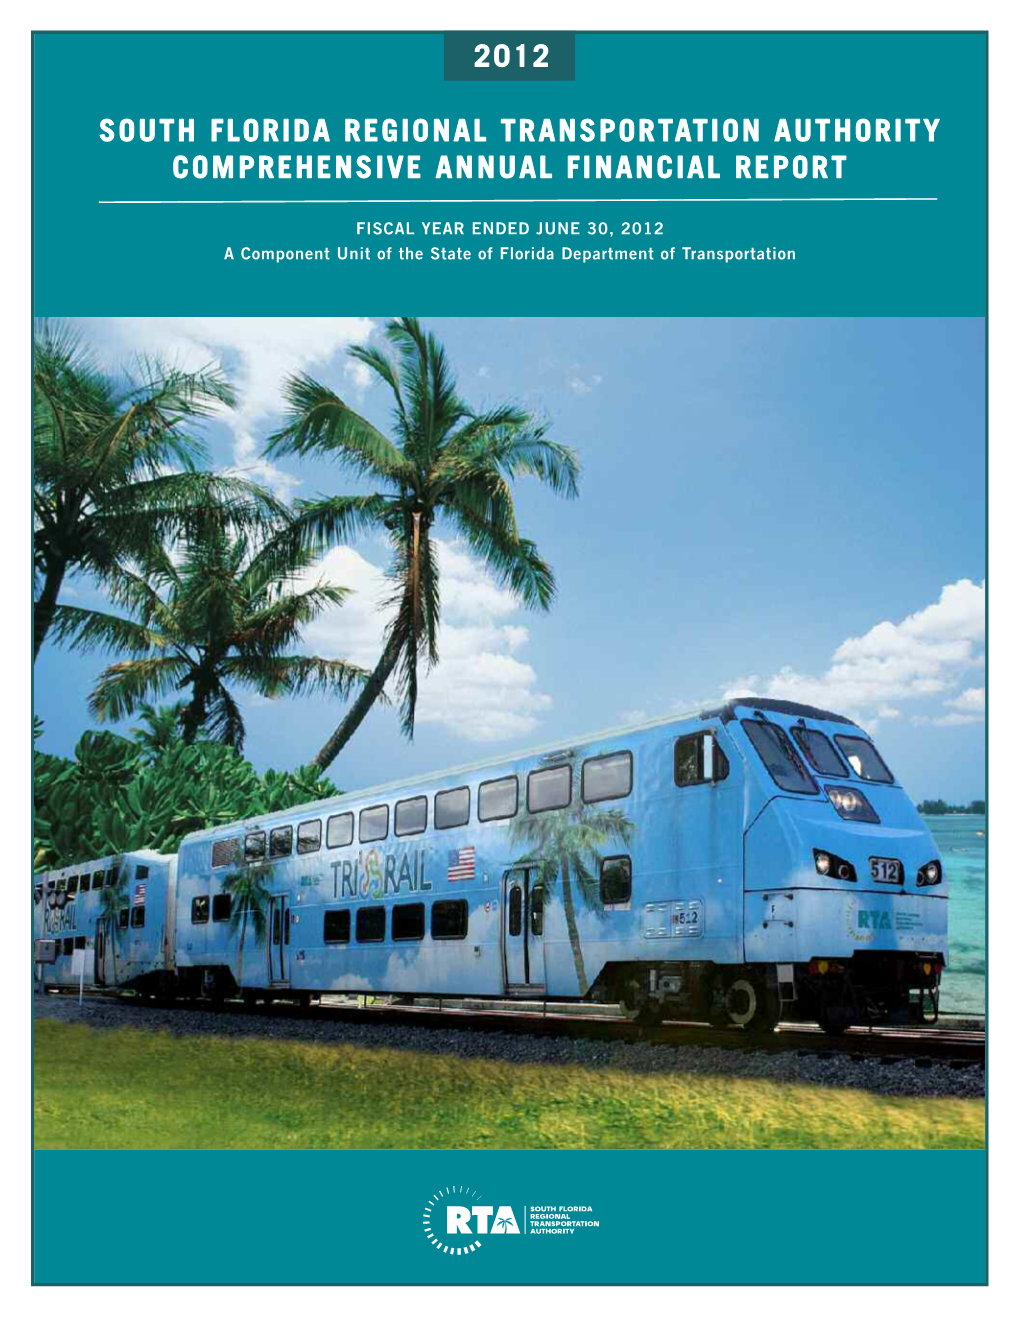 South Florida Regional Transportation Authority Comprehensive Annual Financial Report 2012